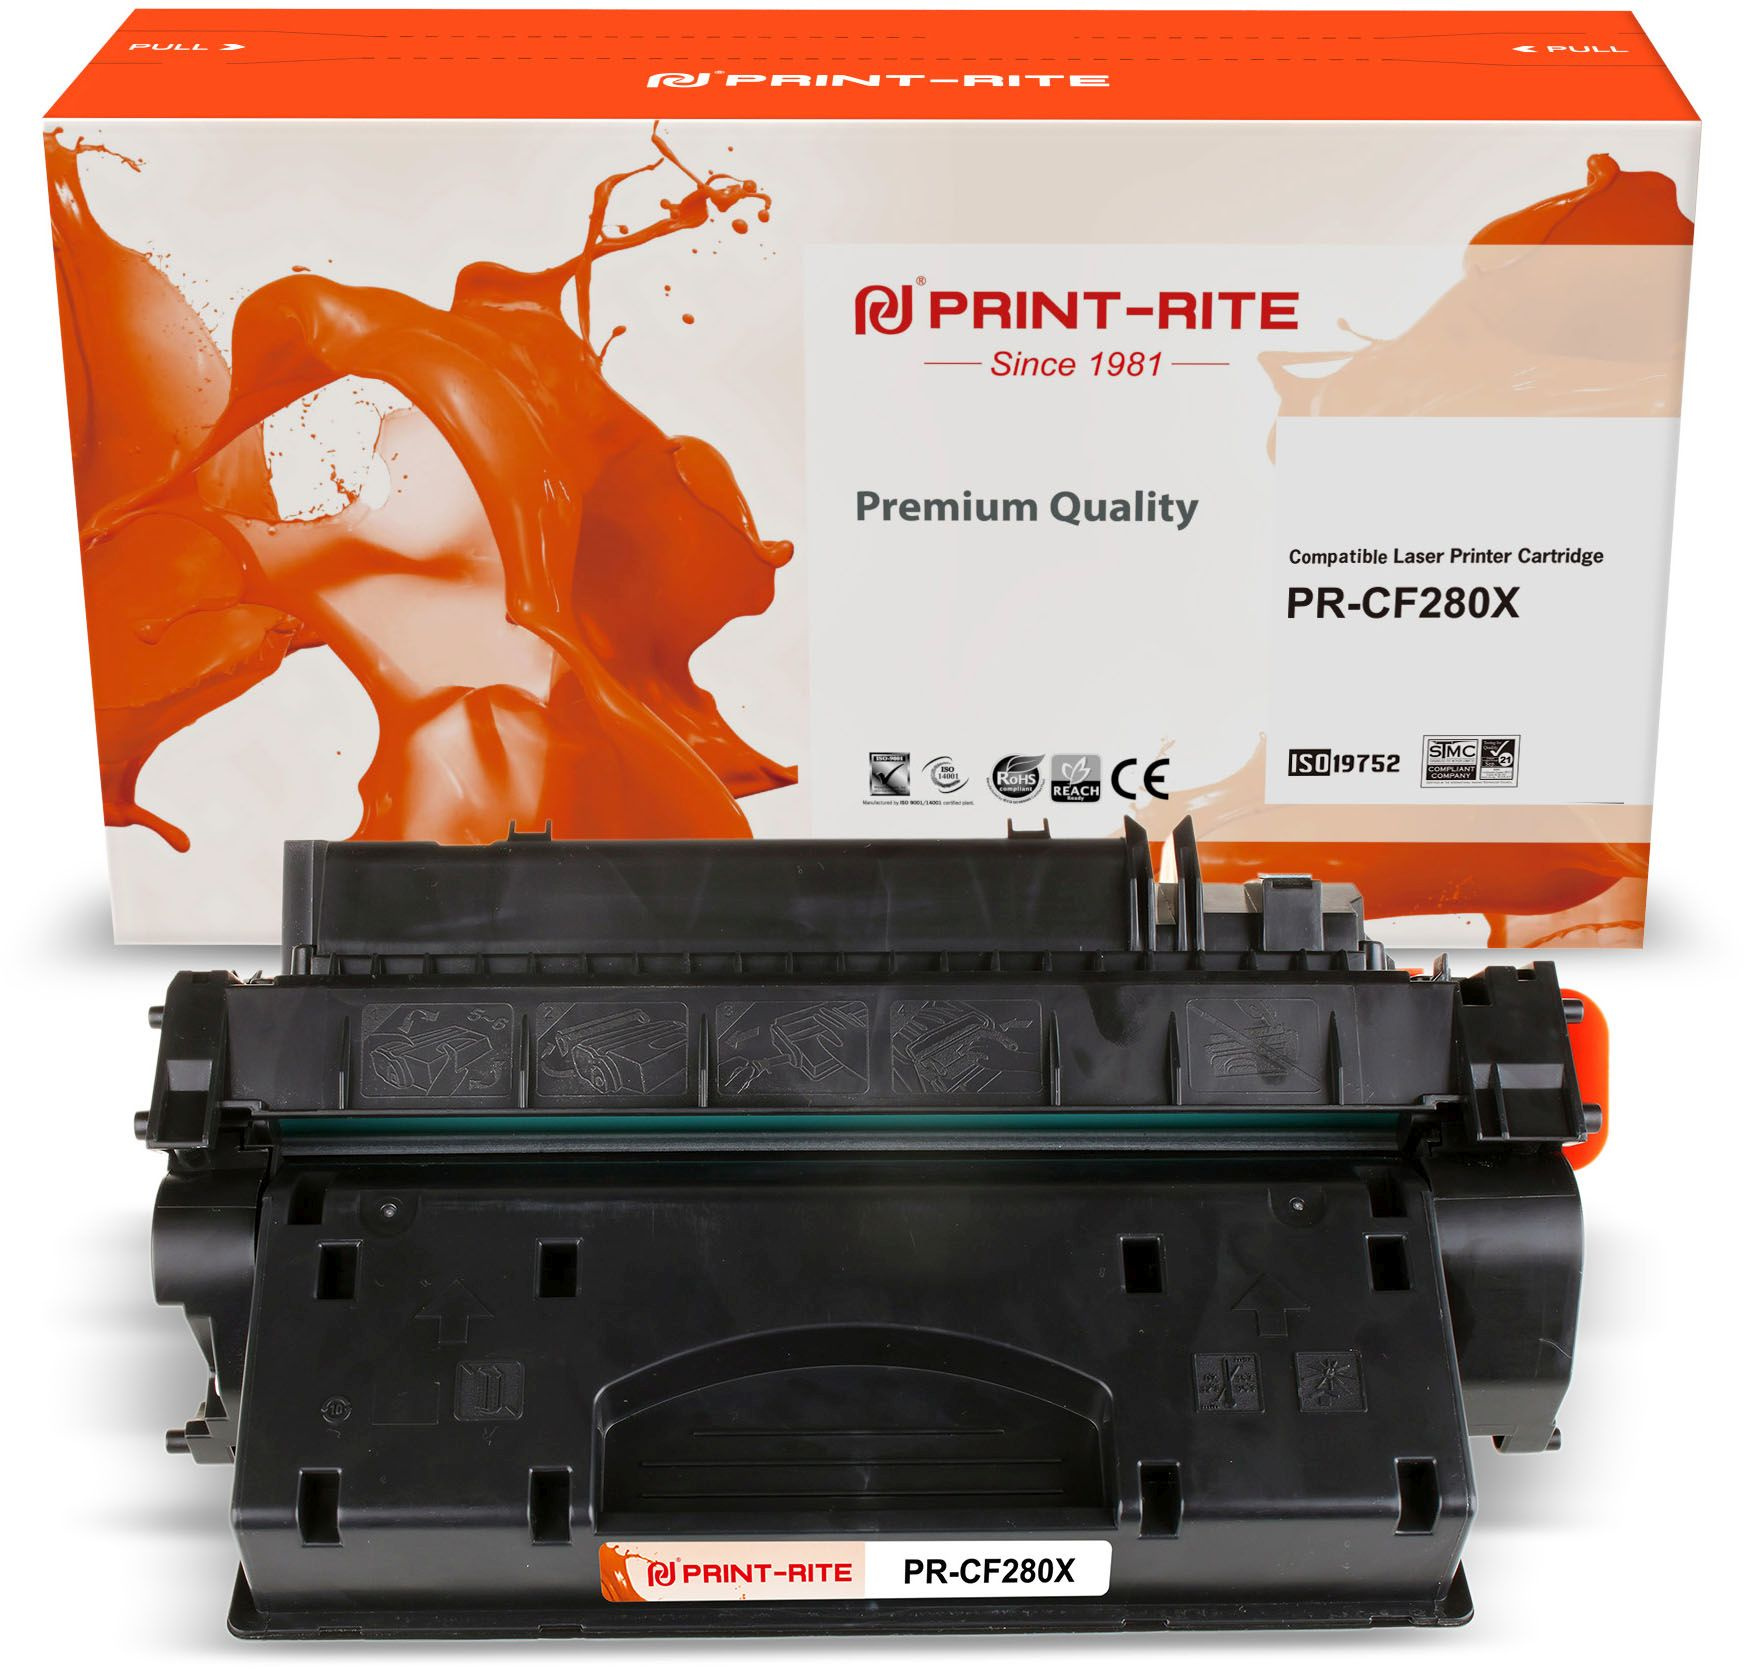   Print-Rite TFHAKFBPU1J1 PR-CF280X CF280X  (6900.)  HP LJ Pro 400/M401/M425